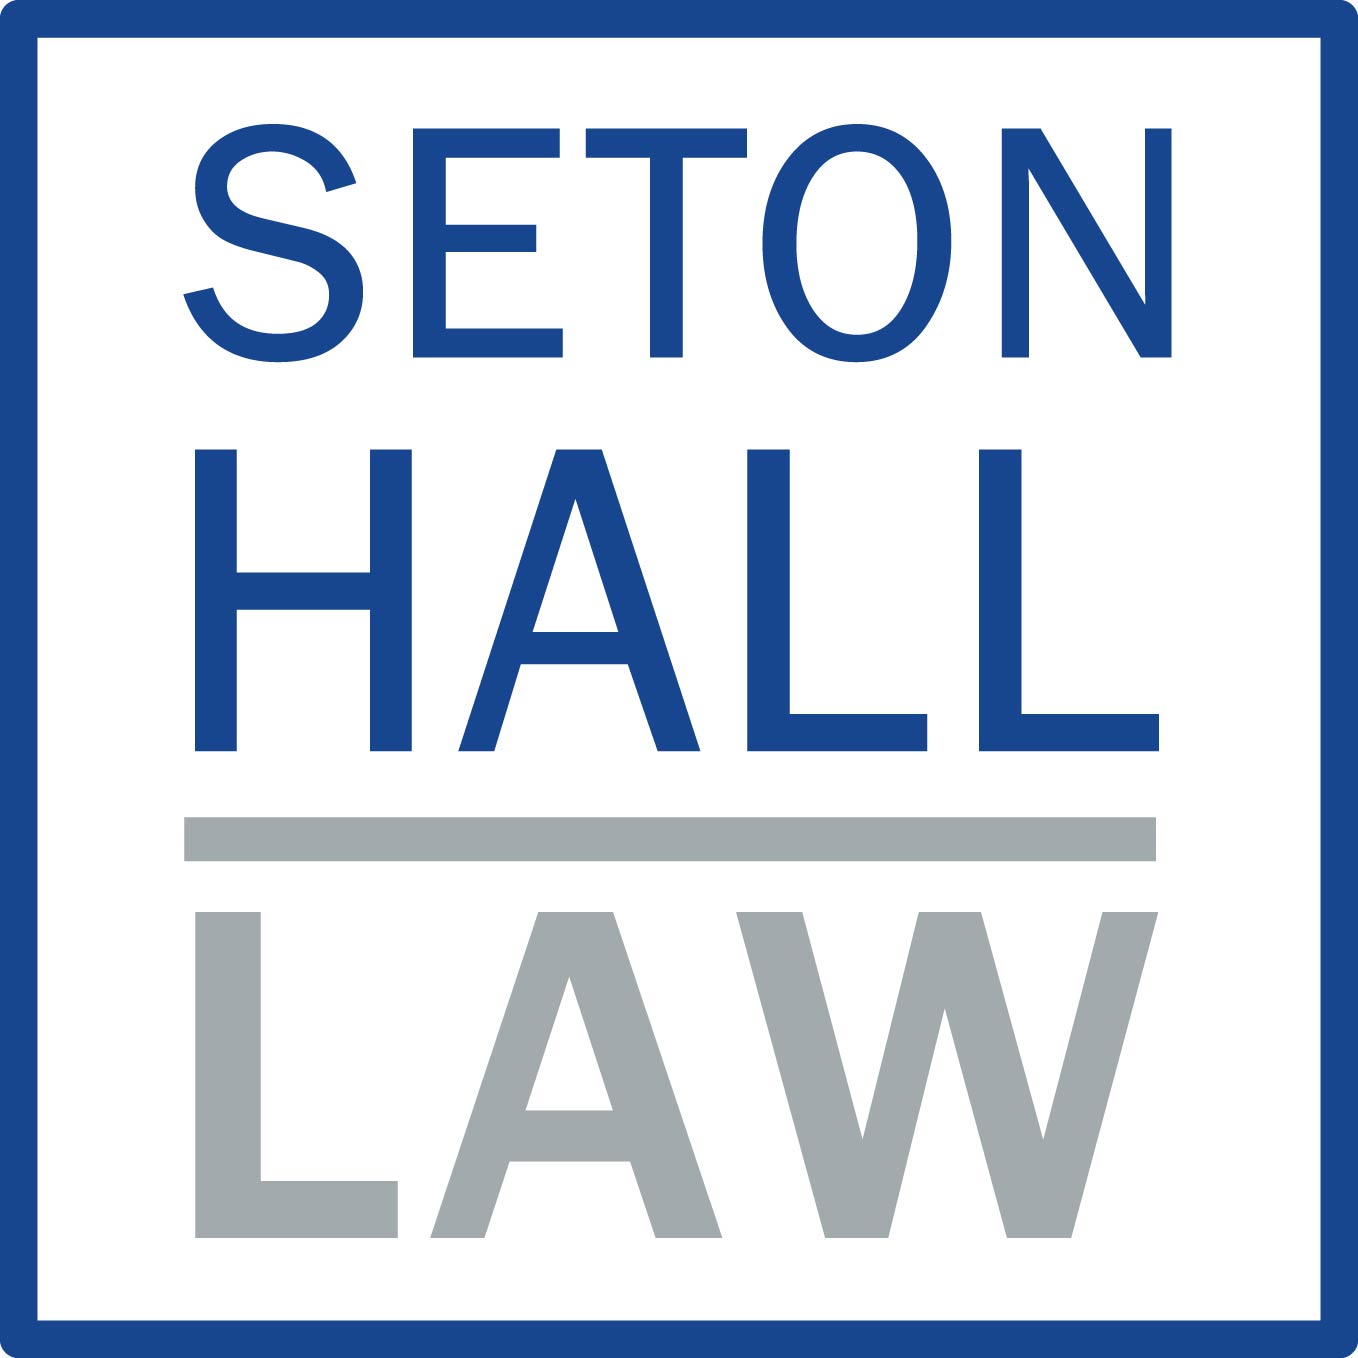 Seton Hall Law (logo box)